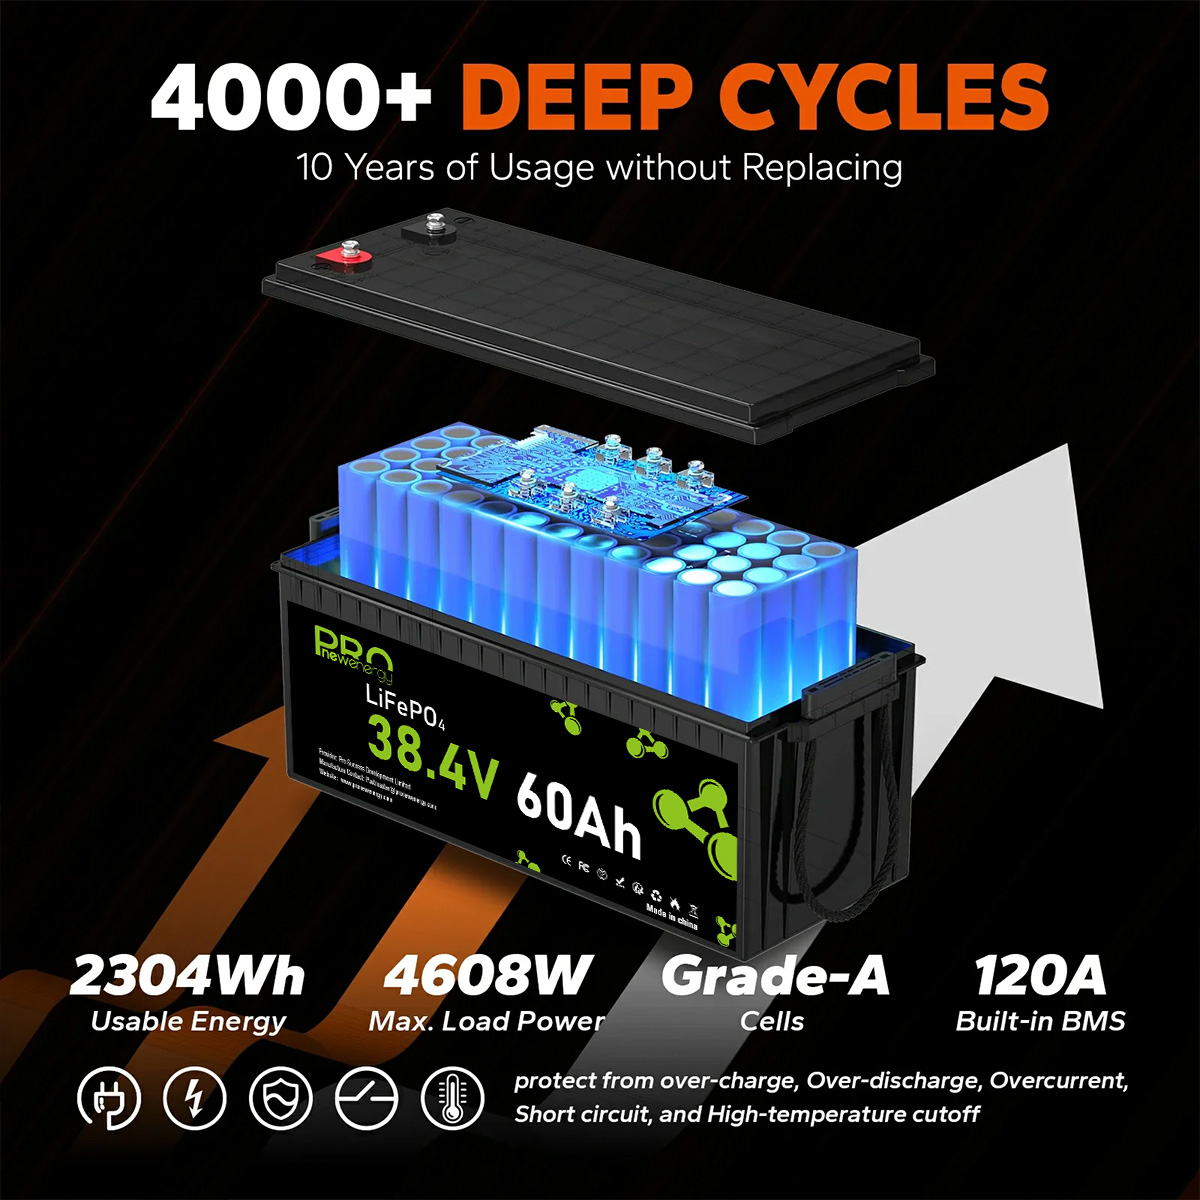 38.4v 60ah Lithium Ion Deep Cycle Battery